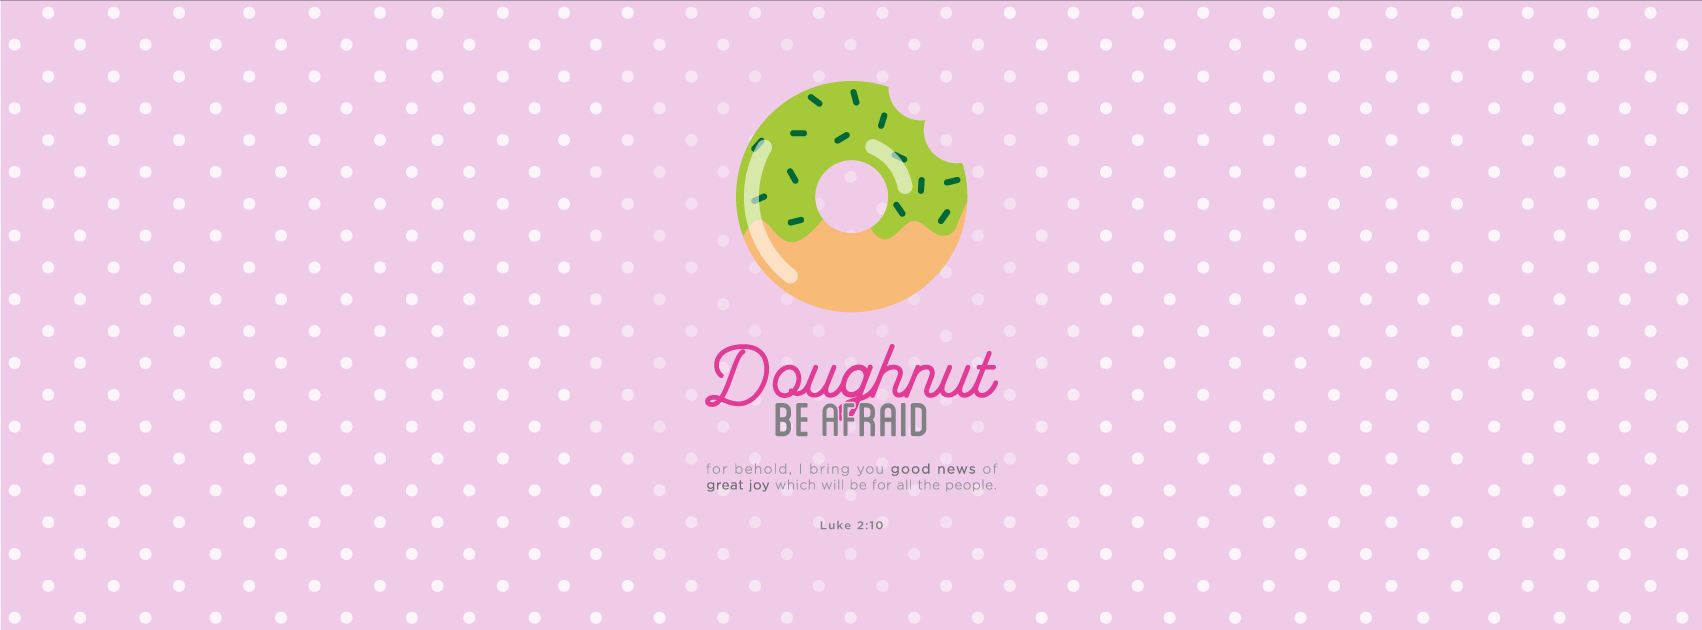 doughnut-wallpaper-1.jpg